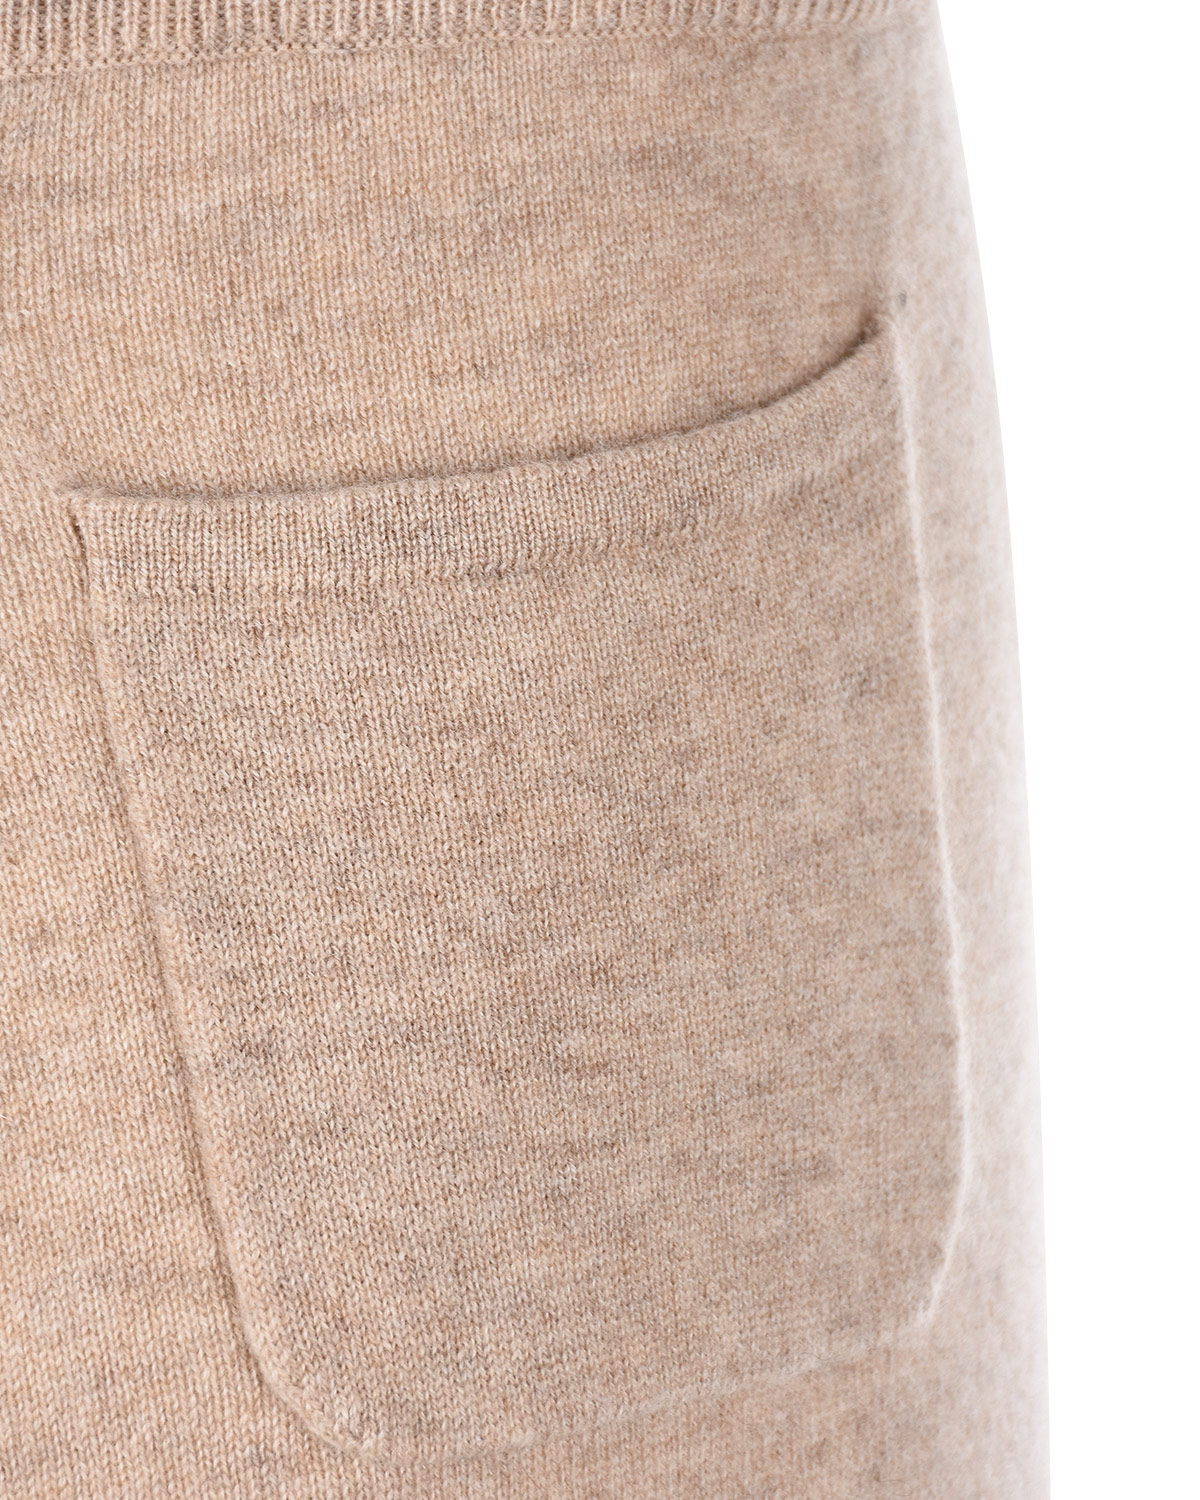 Бежевые брюки с поясом на кулиске Chinti&Parker, размер 38, цвет бежевый - фото 10